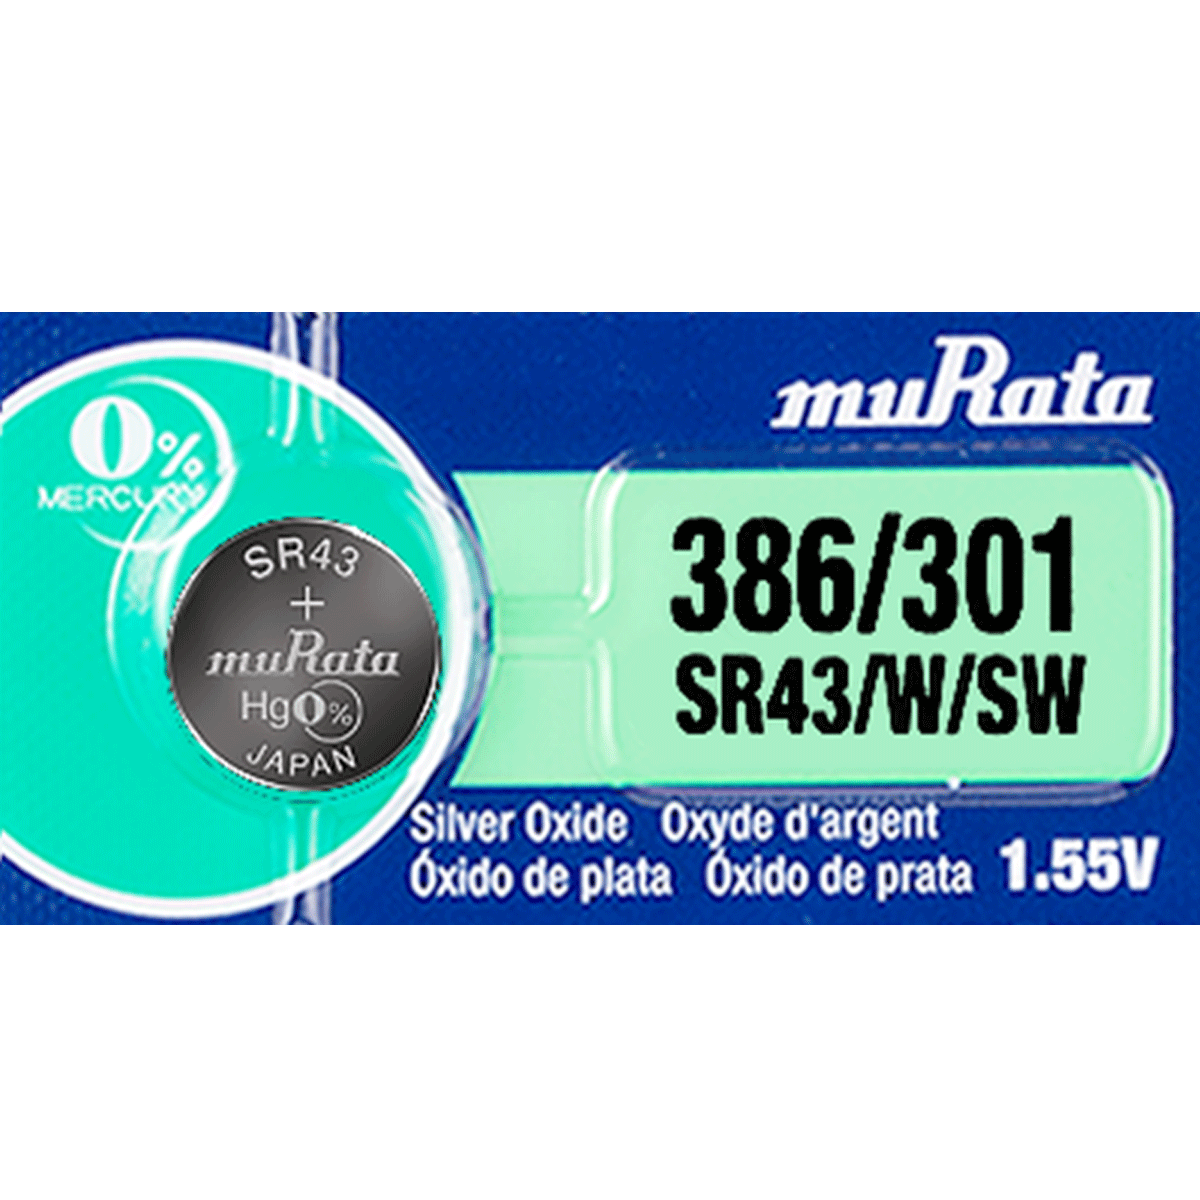 Murata 386 /301 Battery (formerly SONY) Mercury Free Silver Oxide 1.55V (1PC)